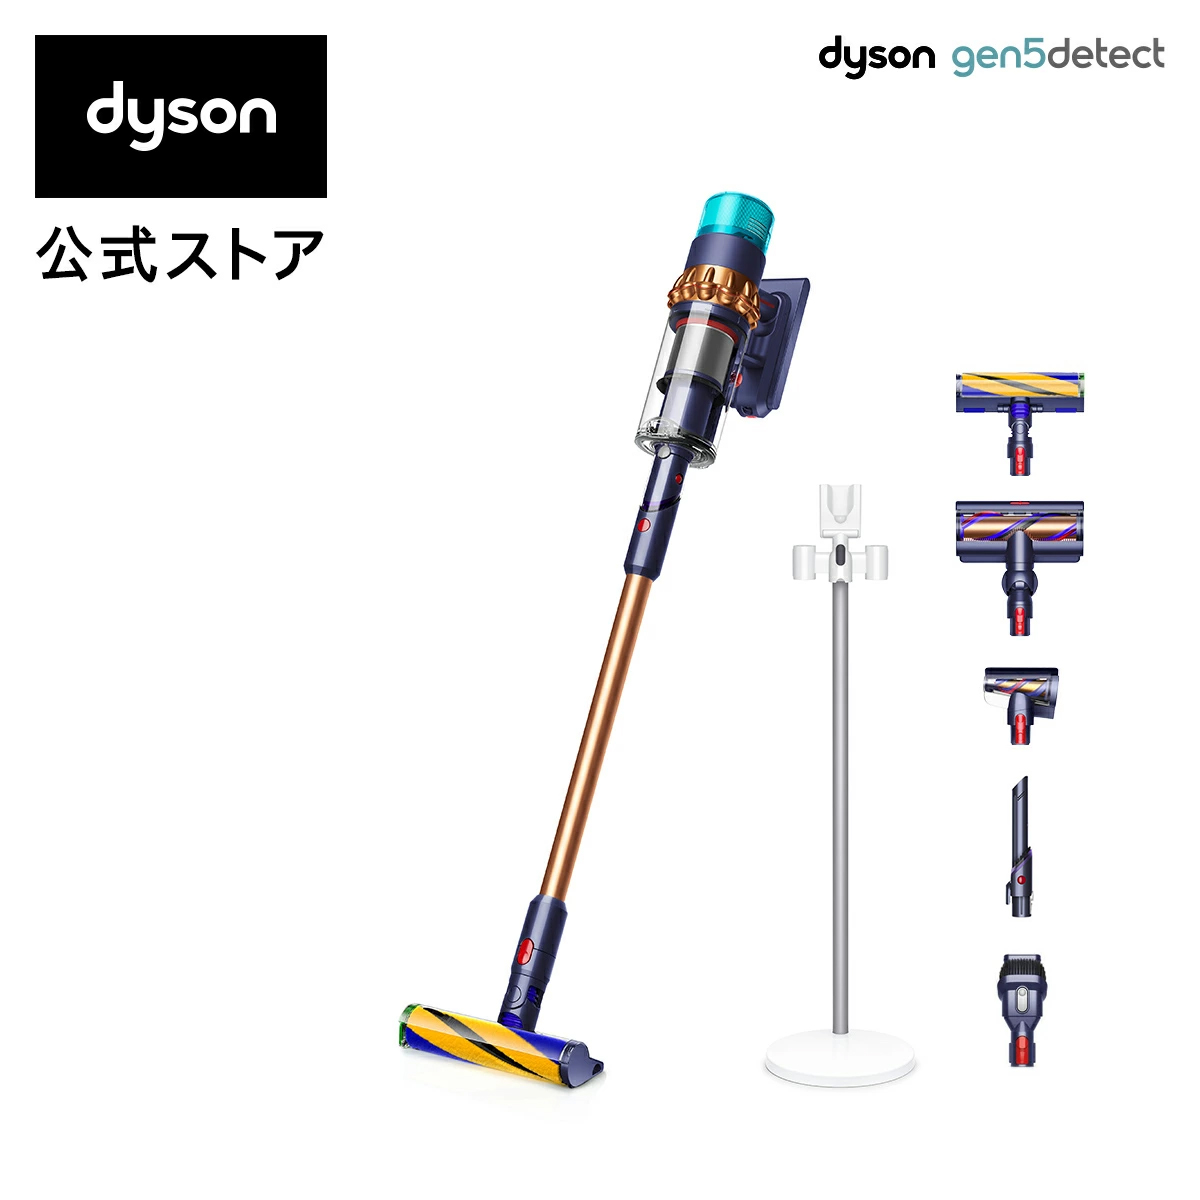 Dyson Dyson Gen5detect Absolute SV23 ABL EX 【直販限定】 掃除機の商品画像